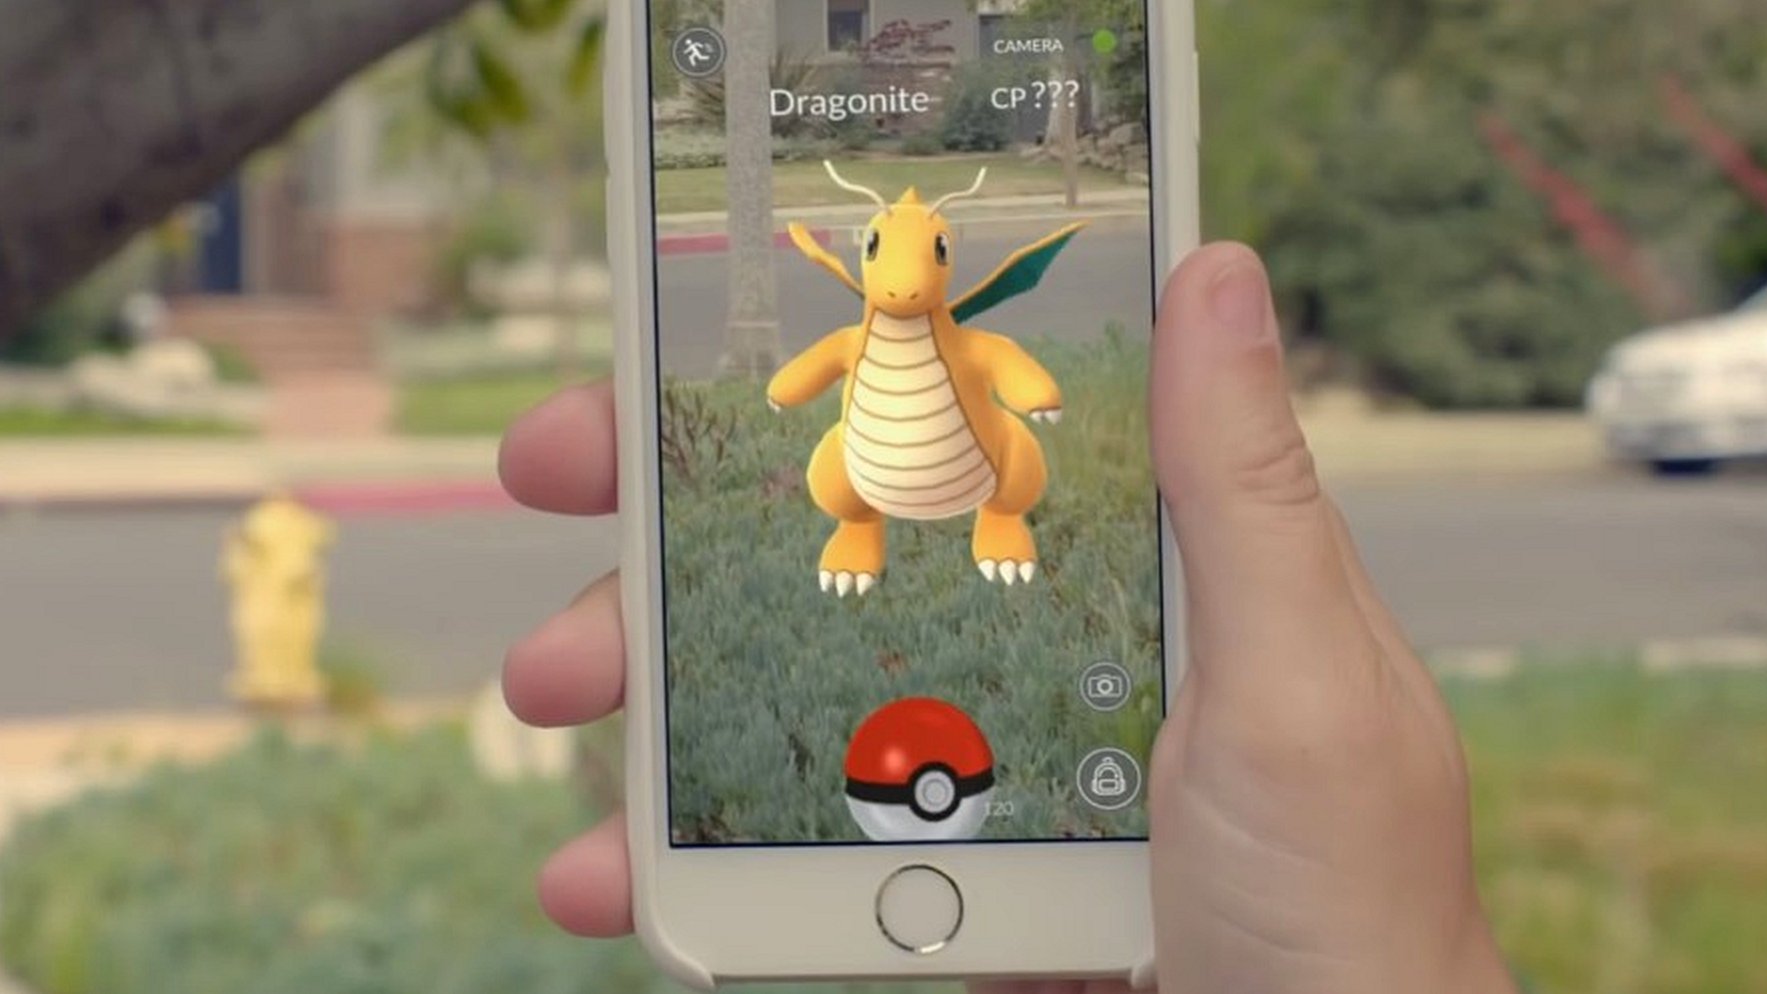 Pokémon GO' developer making fix for Google access snafu, promises